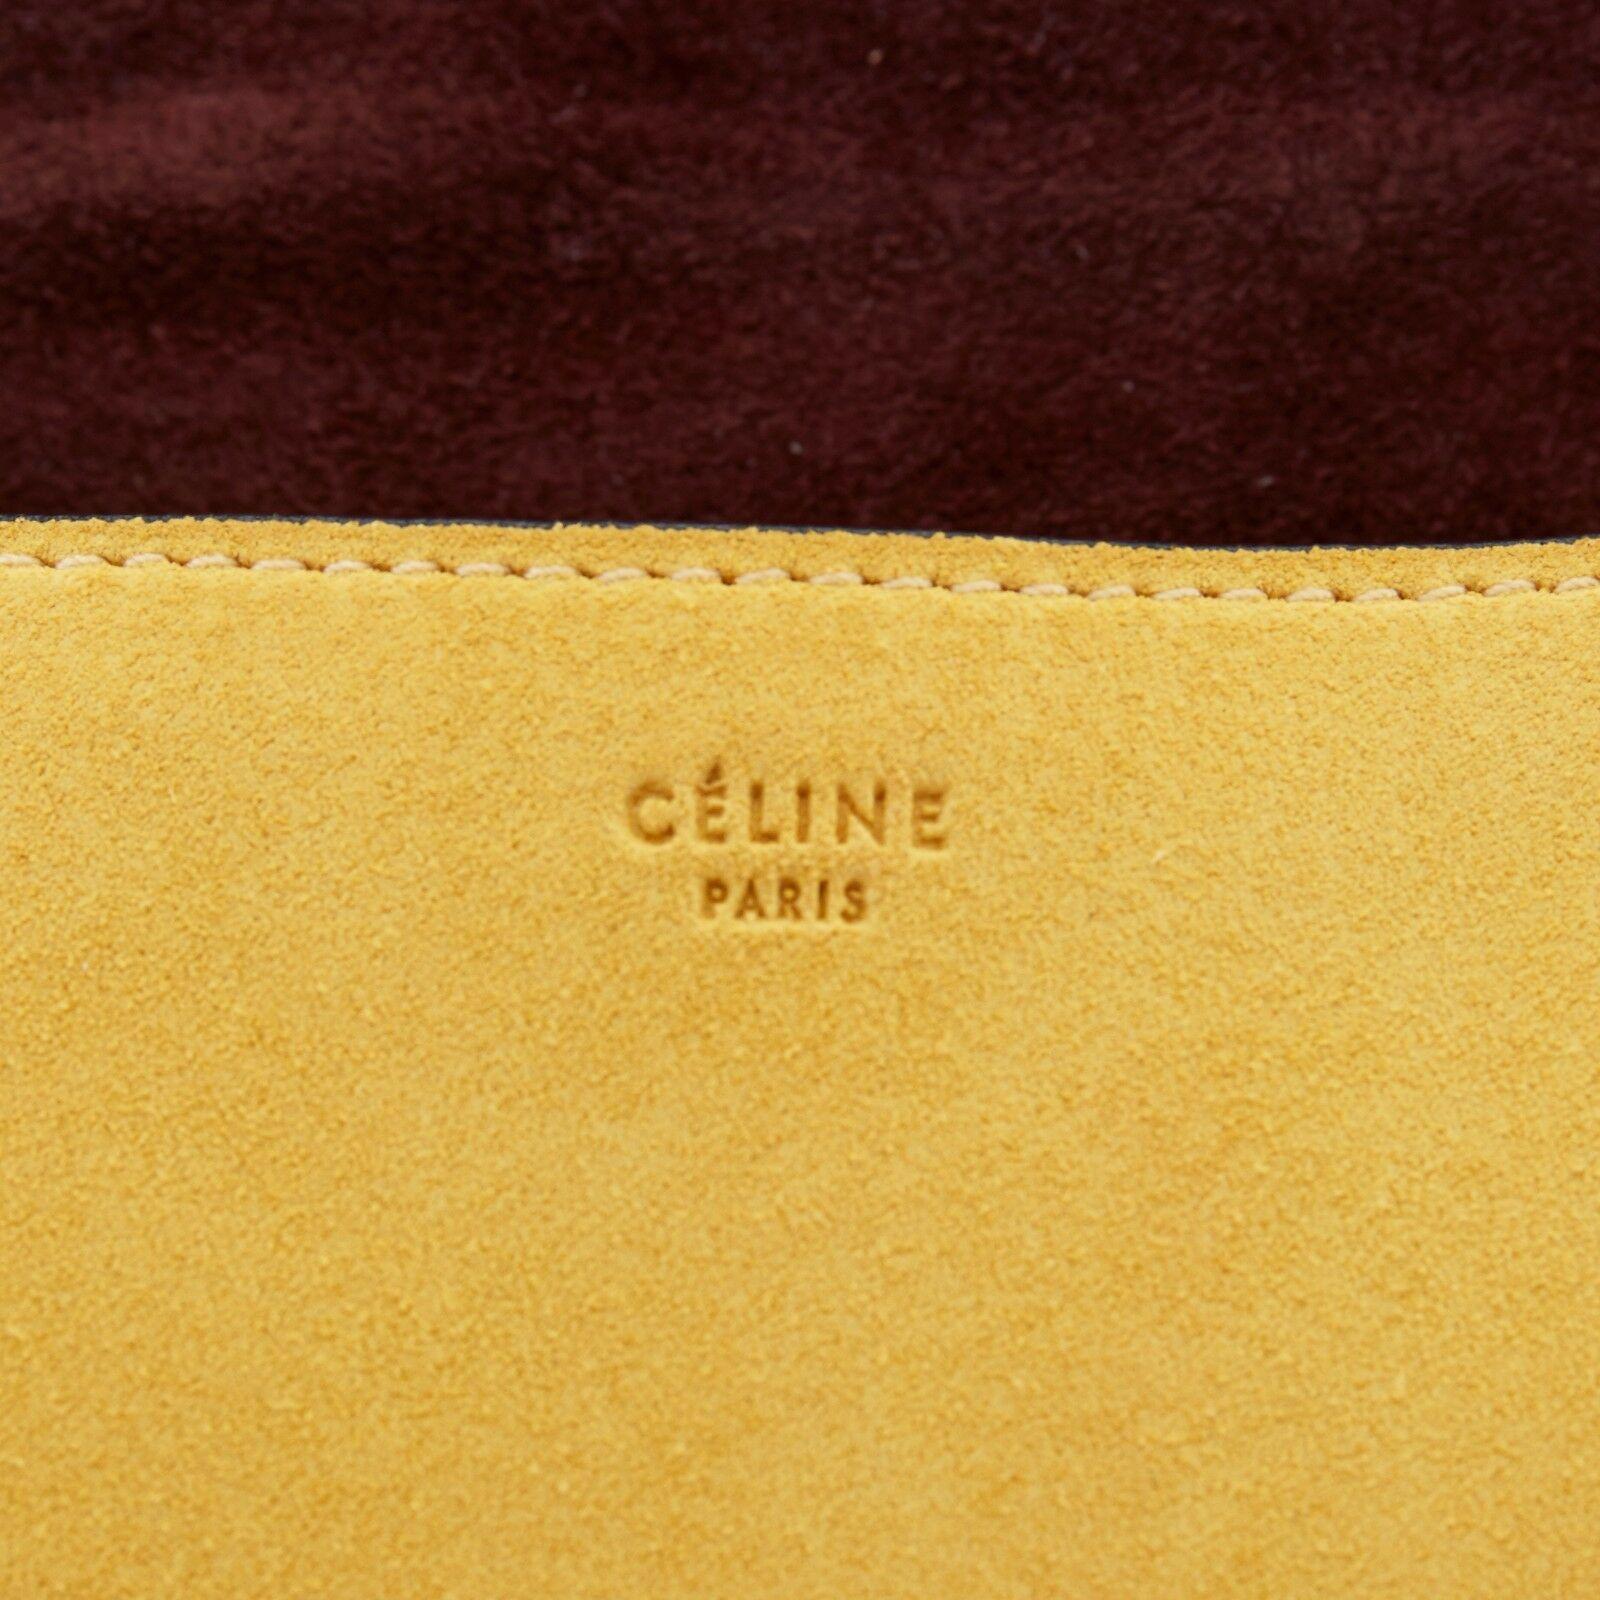 CELINE PHOEBE PHILO Diamond burgundy yellow leather shoulder clutch bag 4